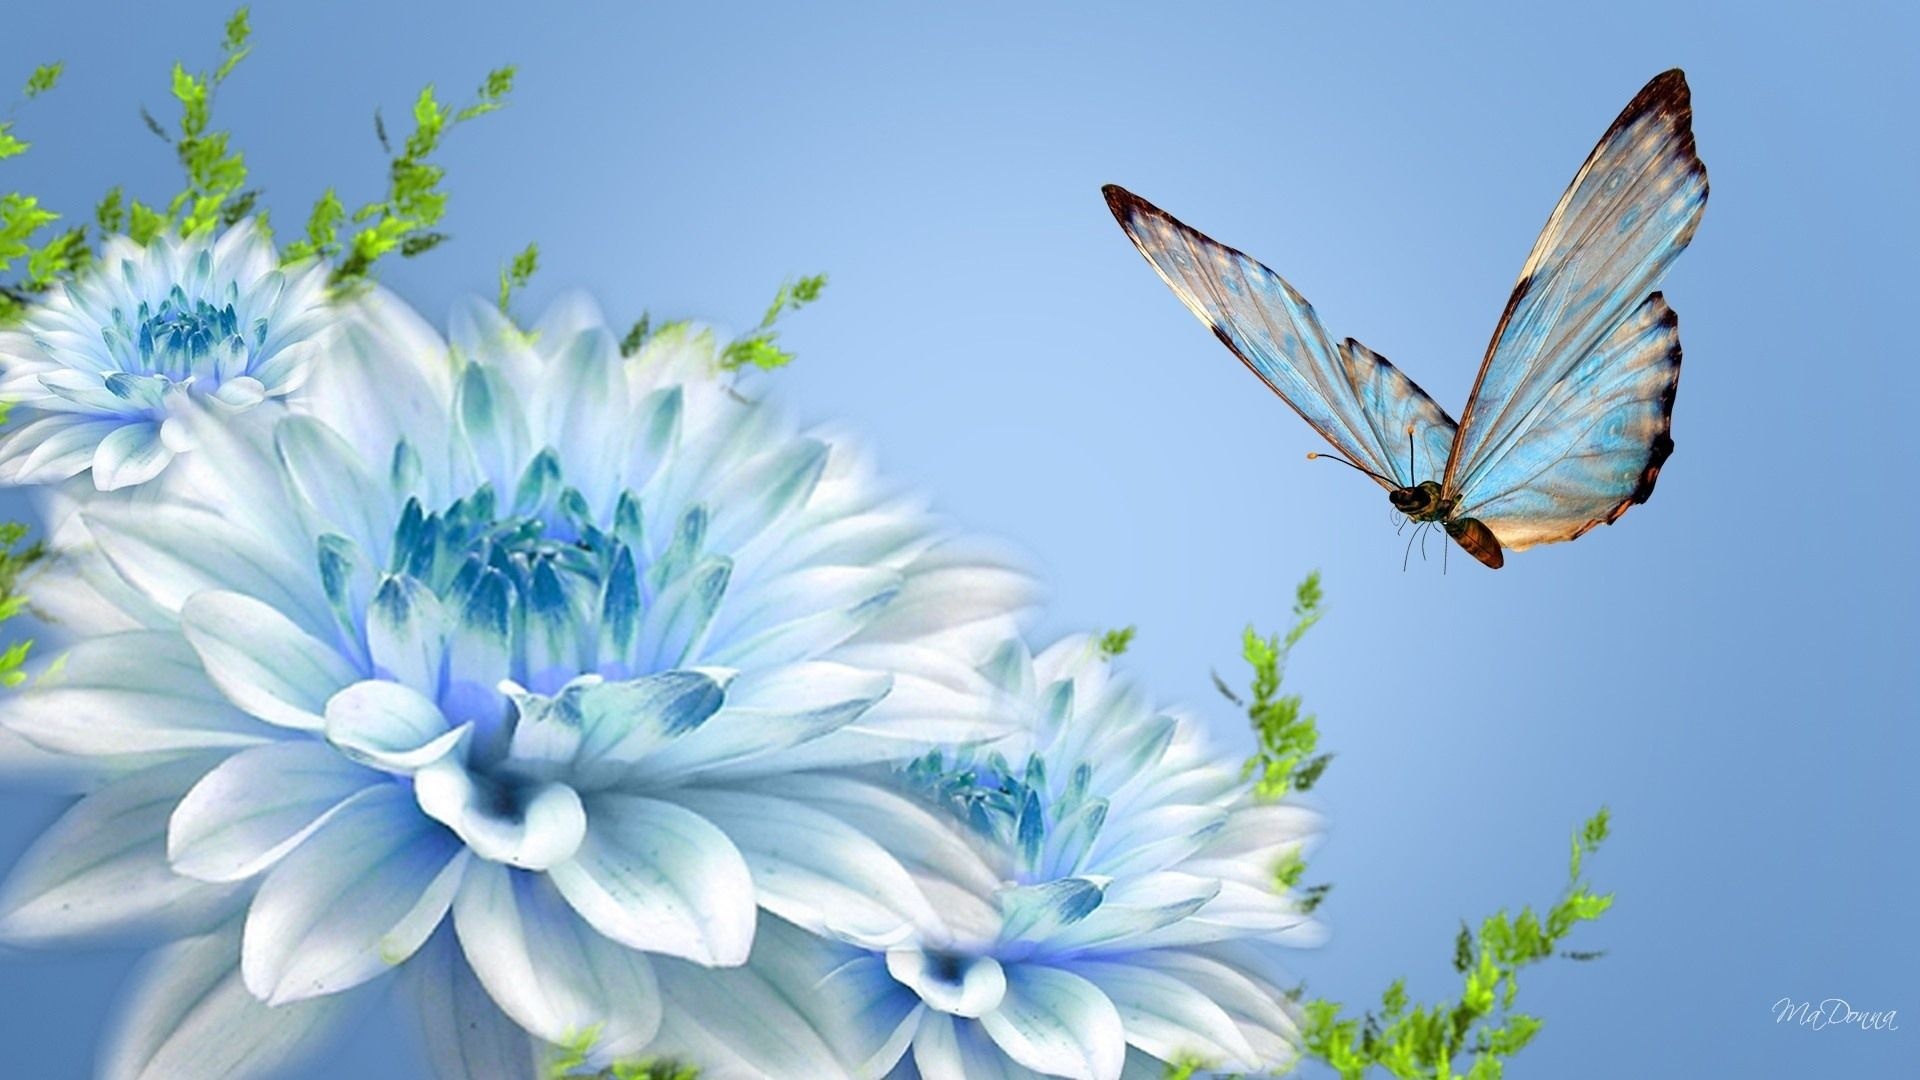 https://blogger.googleusercontent.com/img/b/R29vZ2xl/AVvXsEjZr9YW4f9vOnP1DgJvC6iTYDoVhfRRzsauH19H40GzKasb1dkl1o3AisbOVJWMSCm7fOFgn4hmnEQufsSqrdSUJ3OJRu9Ytk7mxwft4XJdbr2it3odSzh-XZWljGrD8mpTwAIqbxYtheU/s1920/blue_butterfly_and_blue_flower-1080.jpg